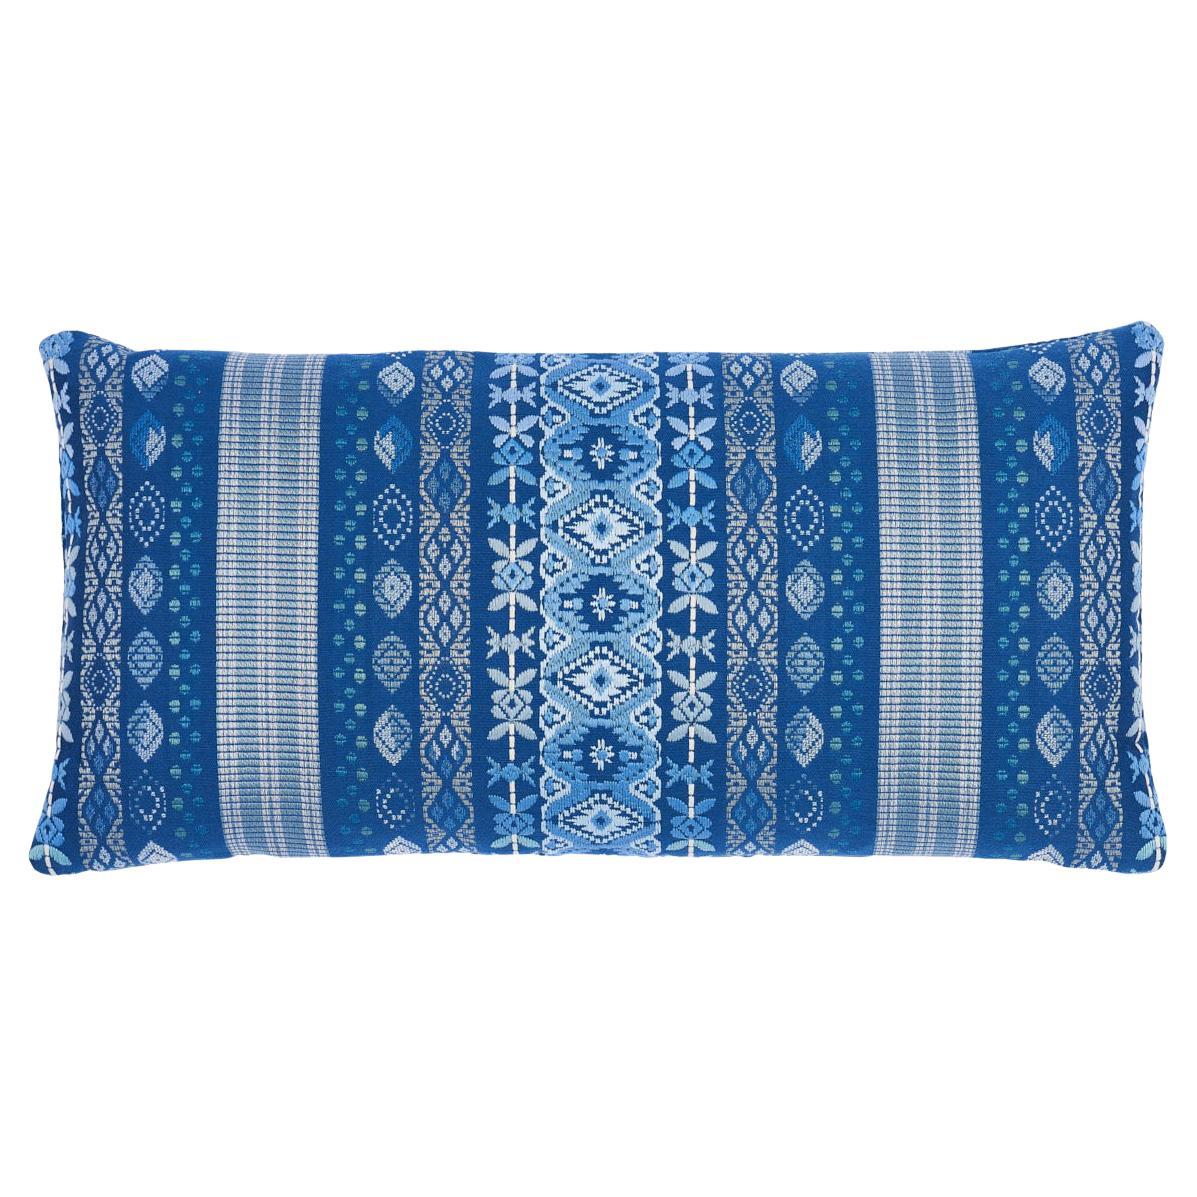 Schumacher Cosima 24" x 12" Embroidery Pillow in Blue Multi